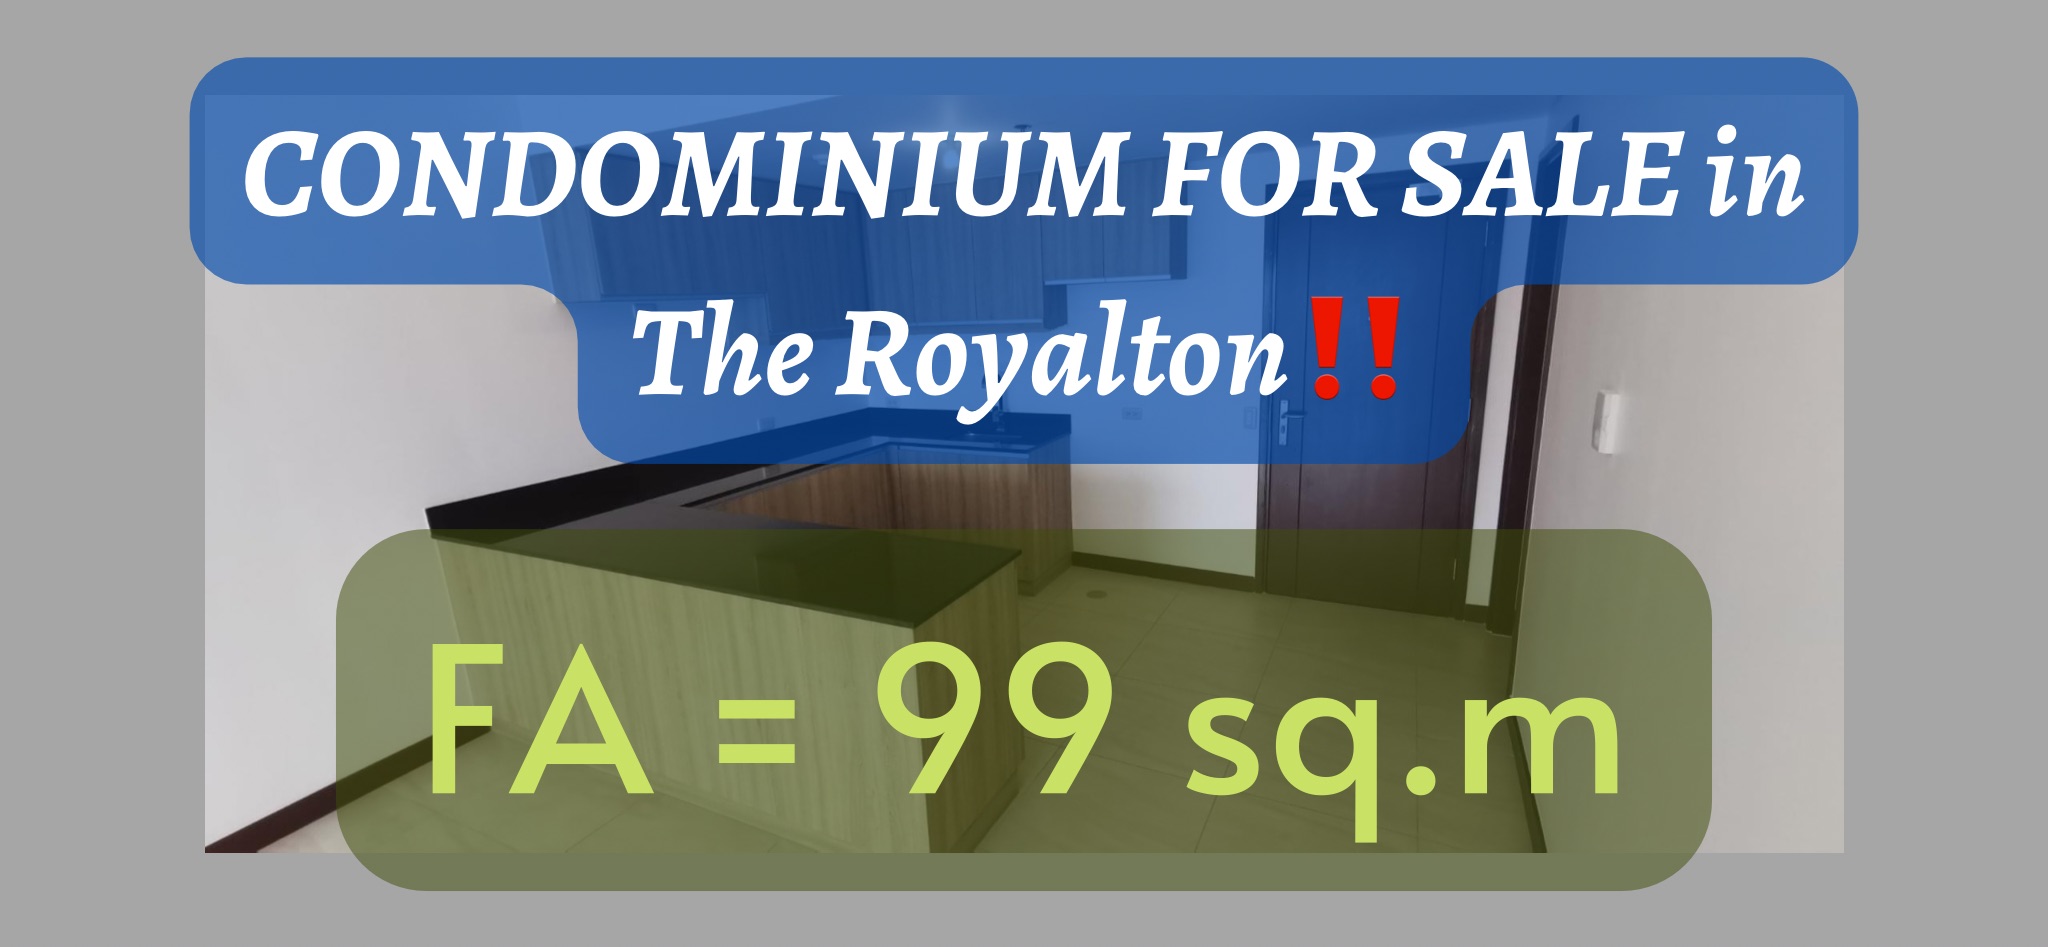 RUSH SALE, BELOW MARKET‼️ CONDOMINIUM FOR SALE in The Royalton‼️